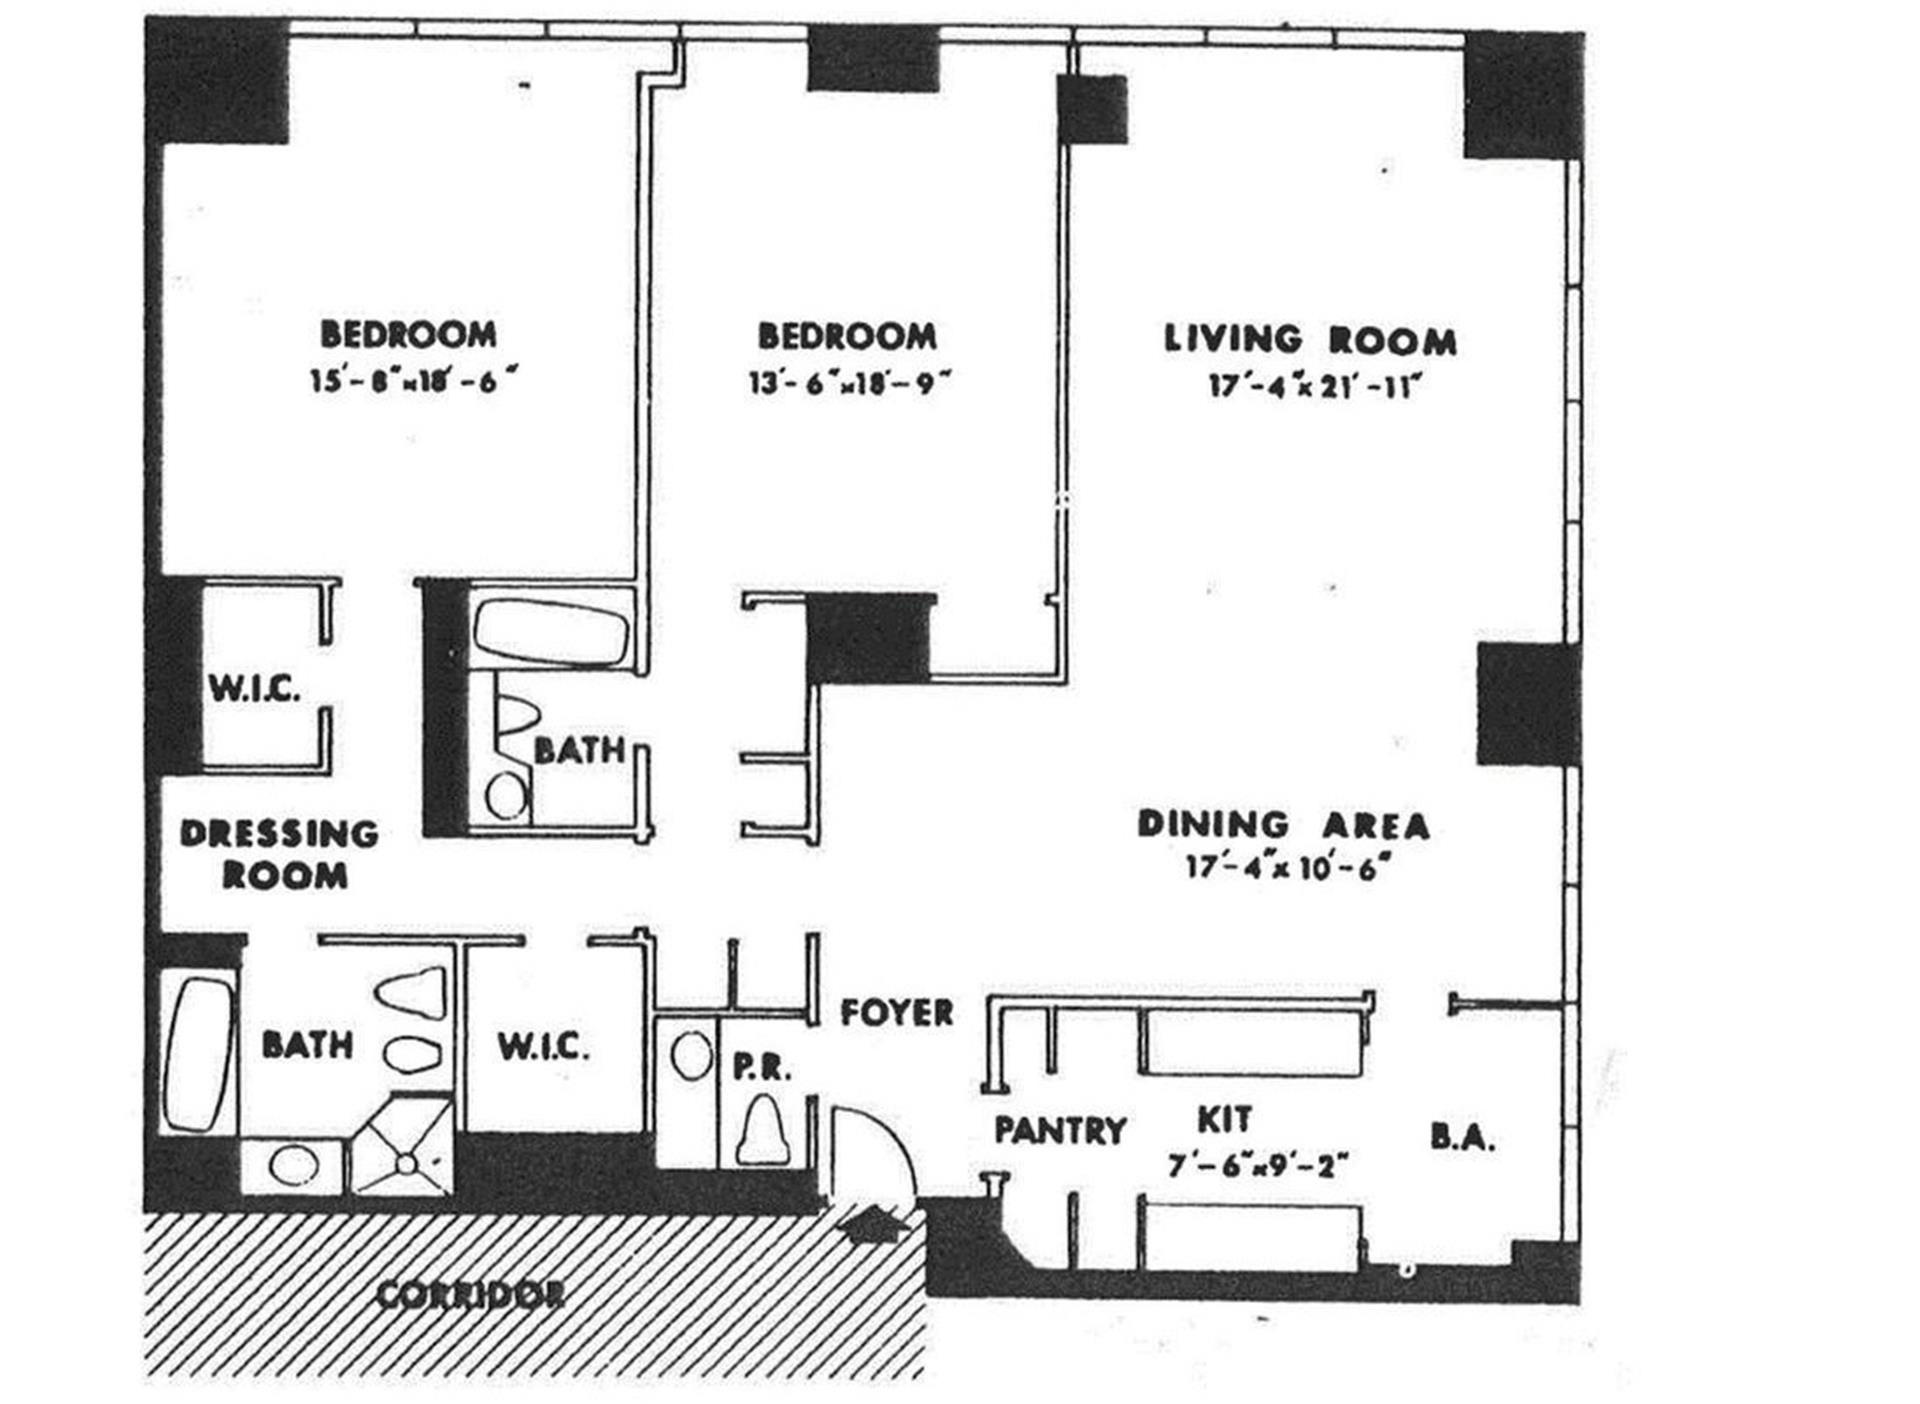 Floorplan for 641 5th Avenue, 34B